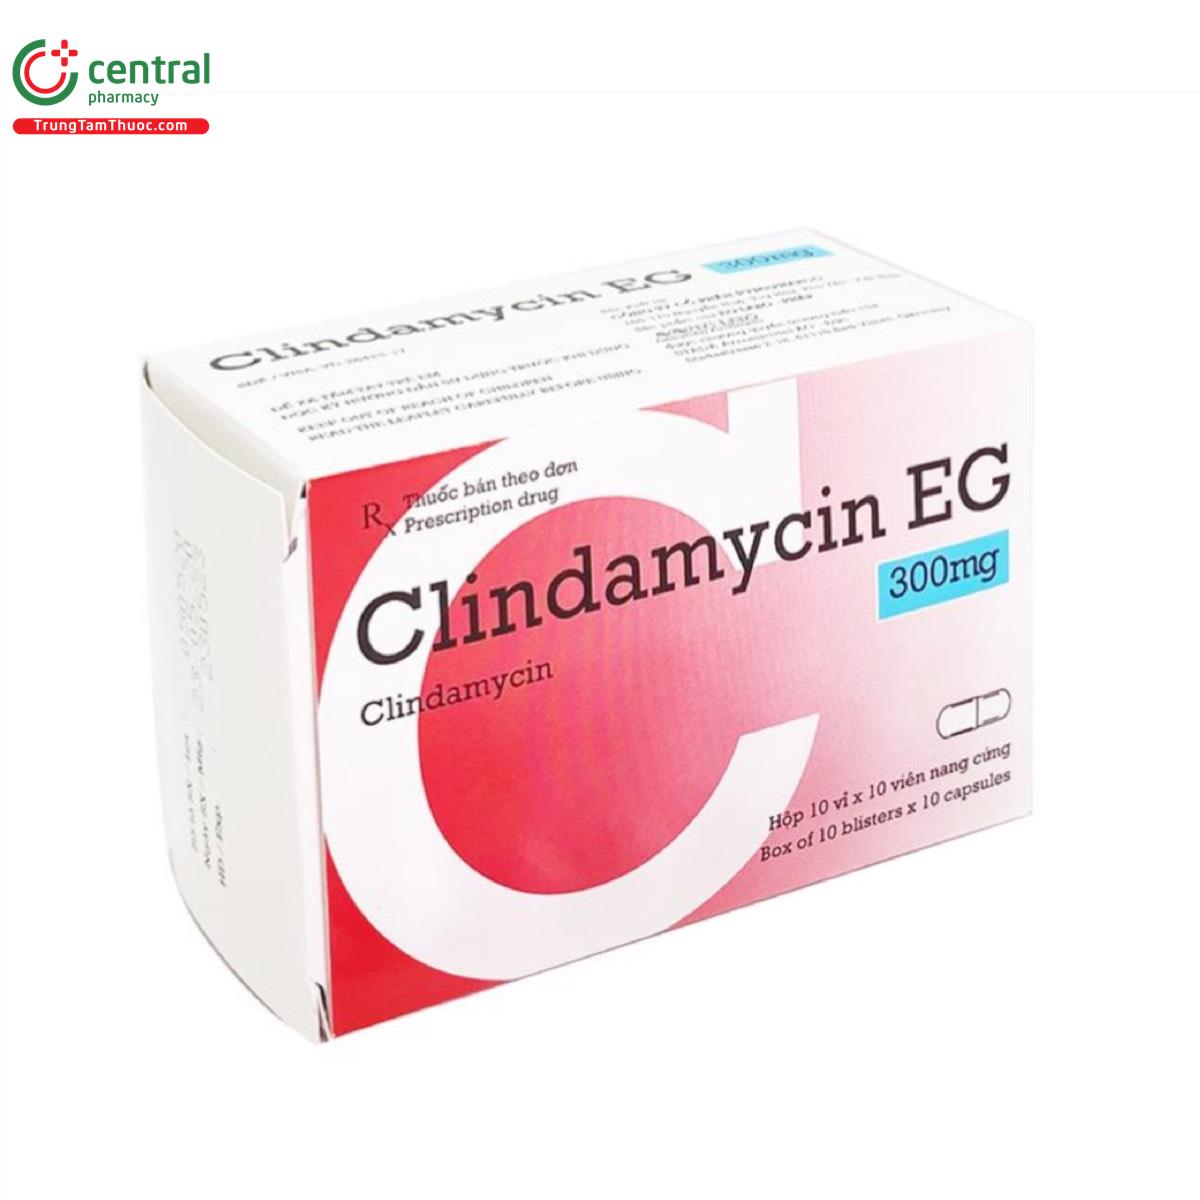 clindamycin eg 300mg 3 R7812